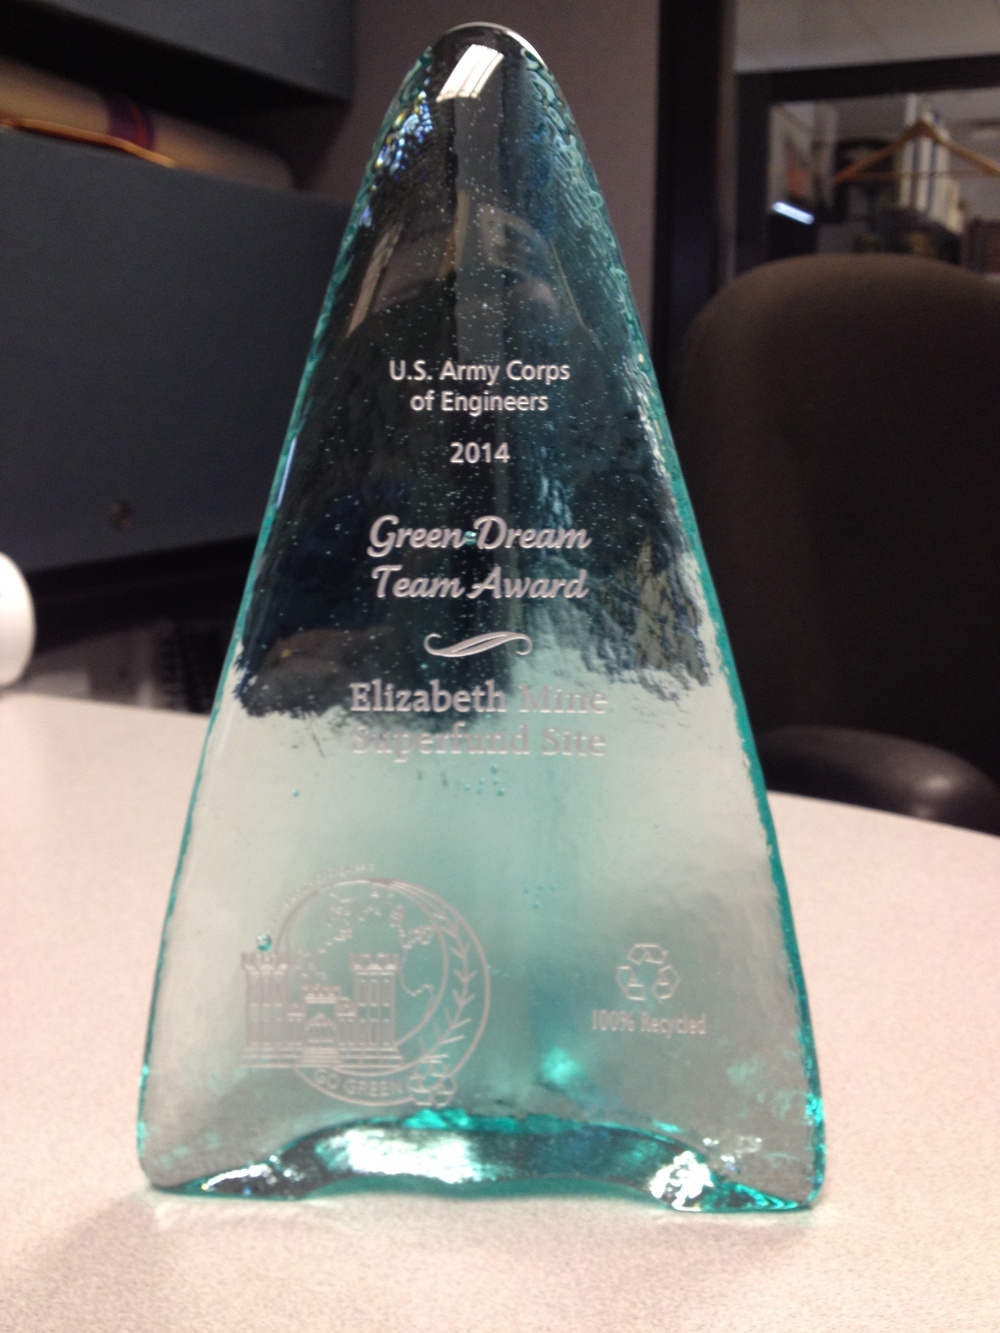 Elizabeth Mine team receives top environmental award